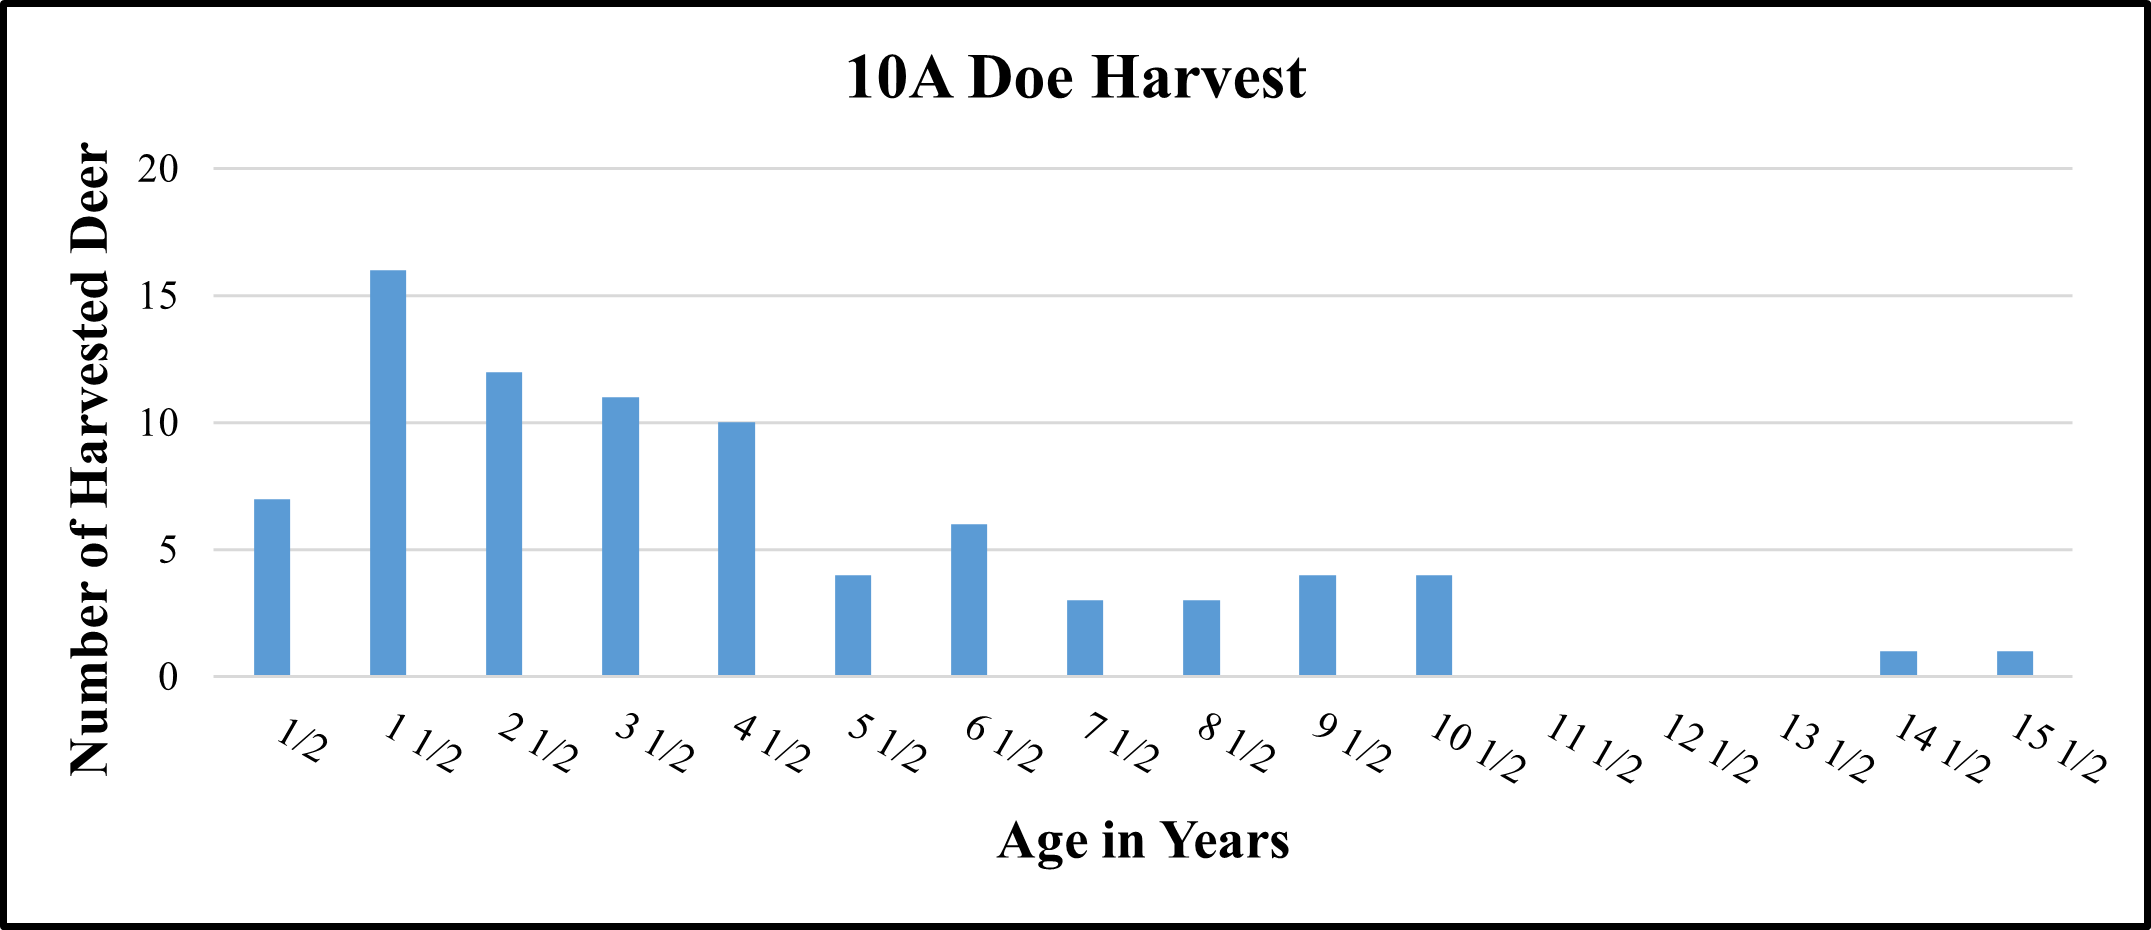 10A Doe Harvest